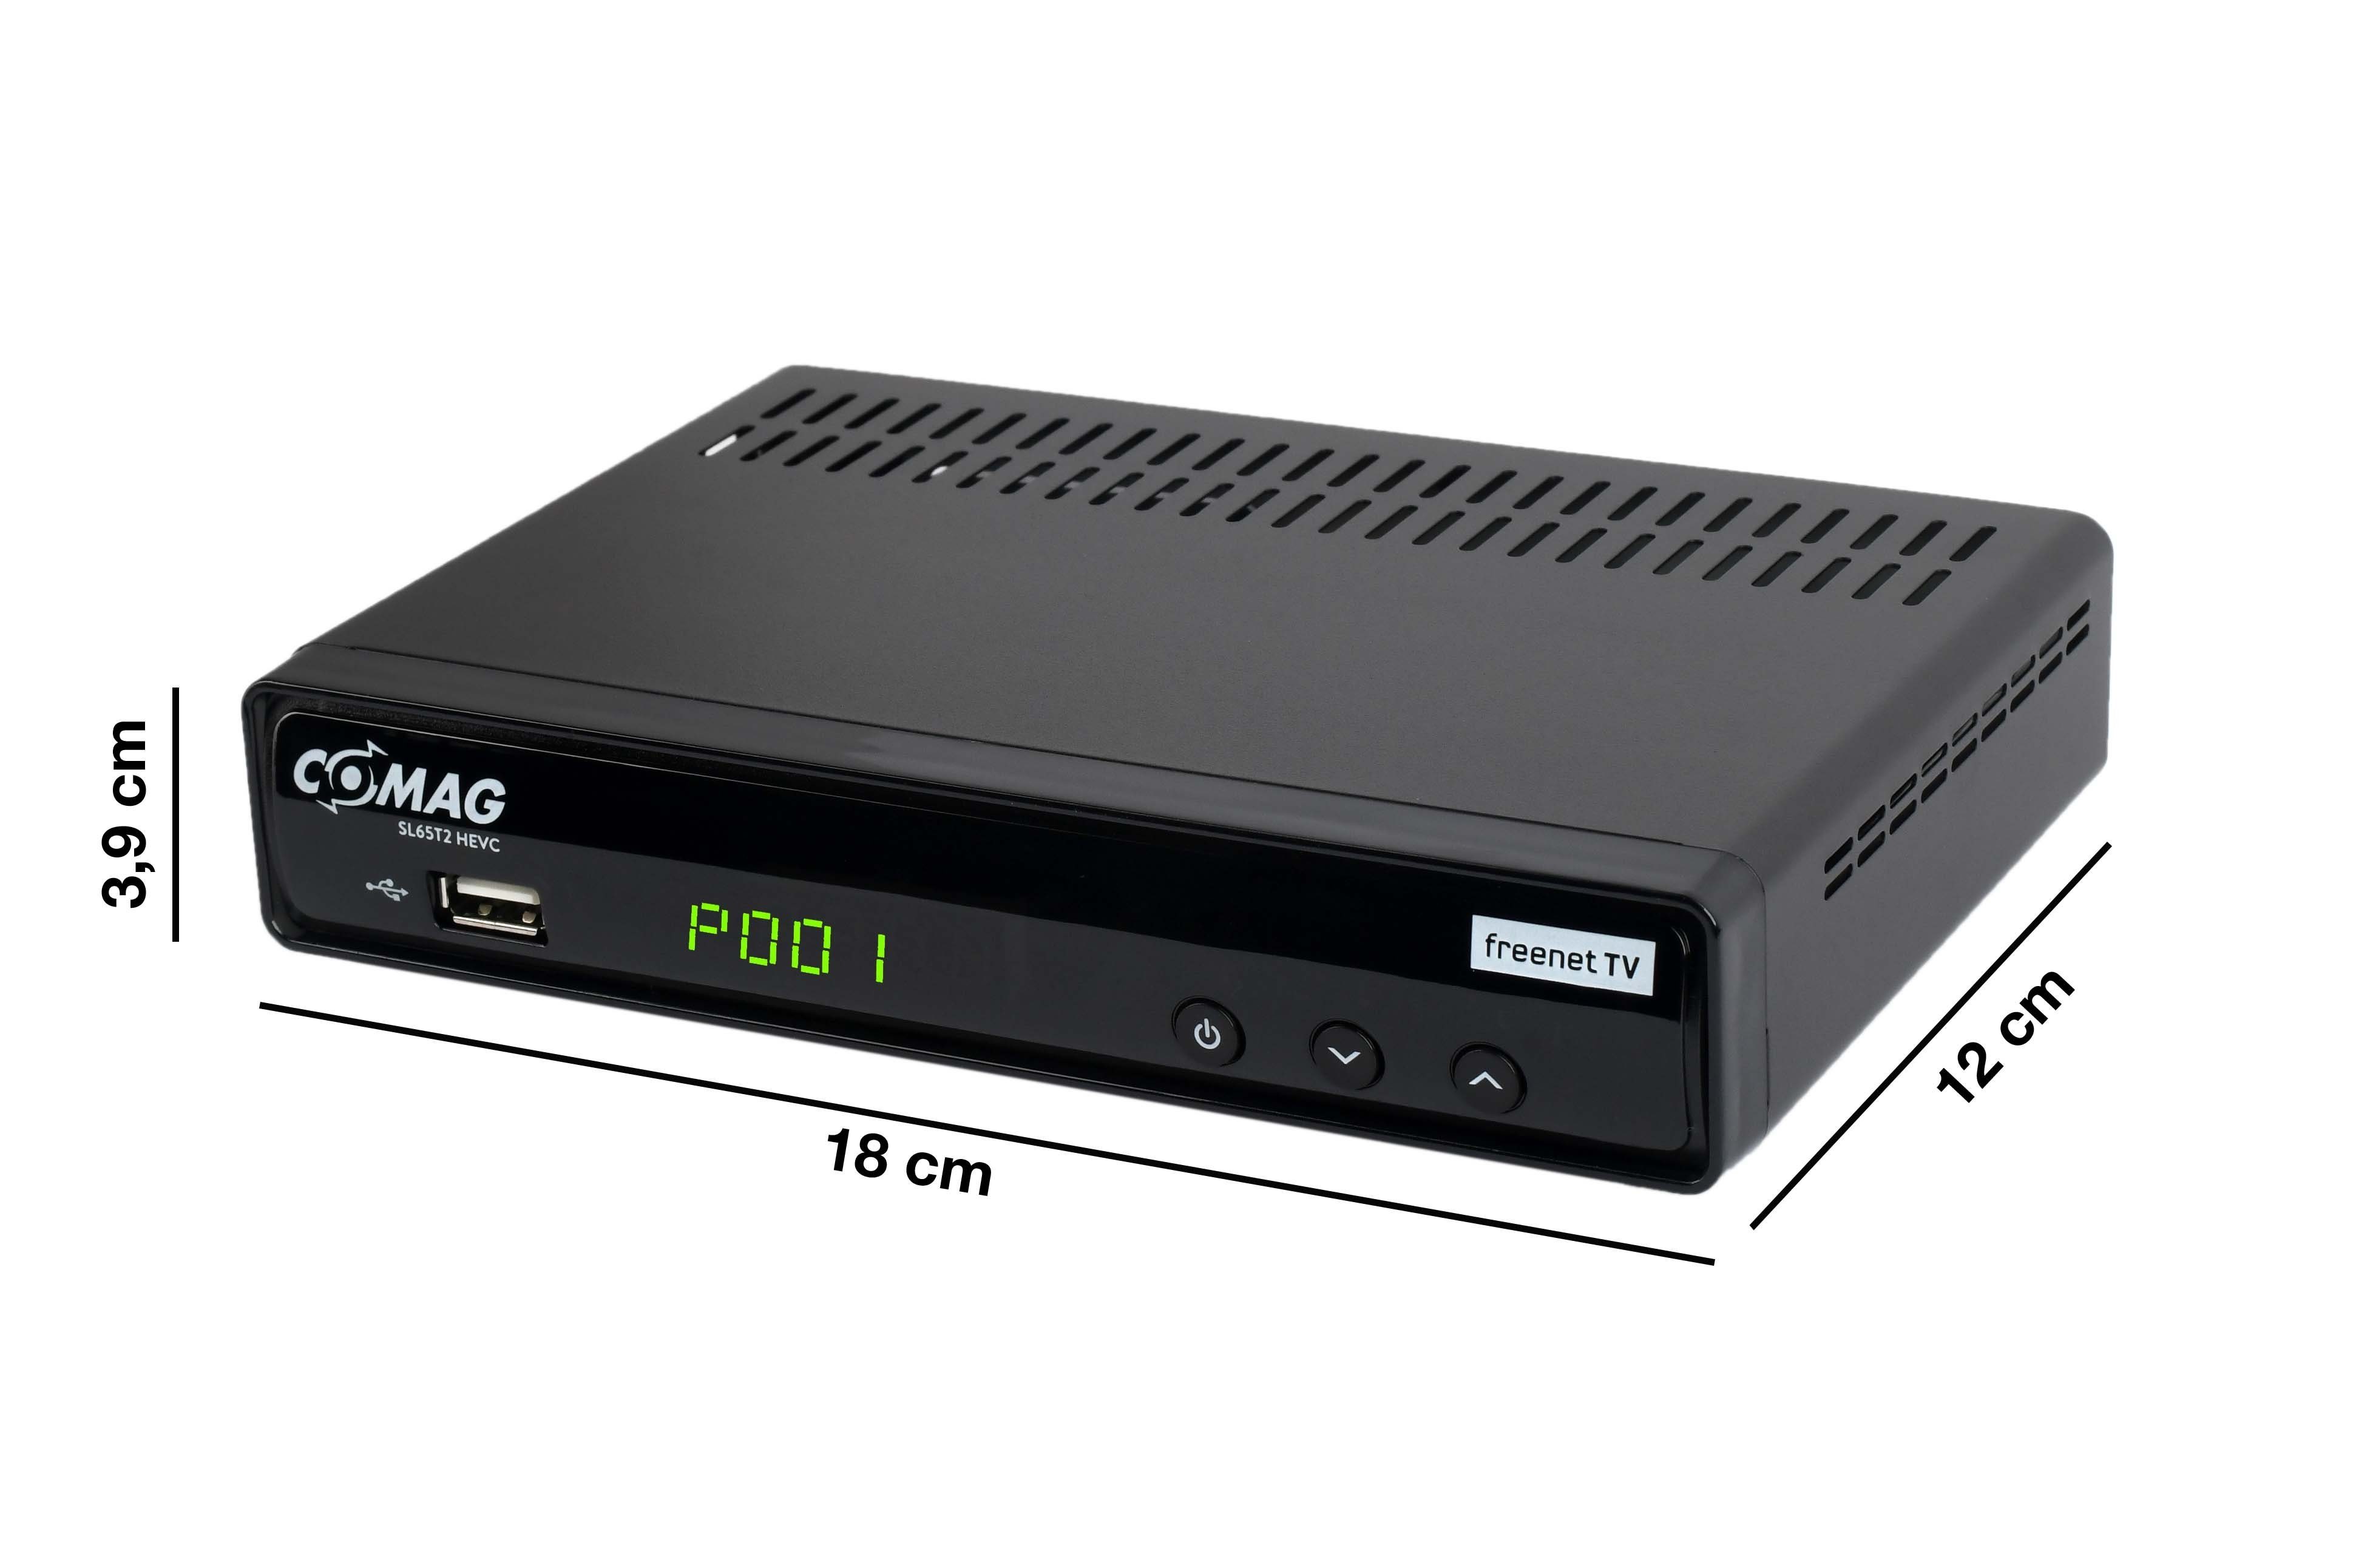 Comag SL65T2 freenet TV, Kabel, Antenne) aktive DVB-T2 HDMI Full HD DVB-T2 HD Receiver (2m